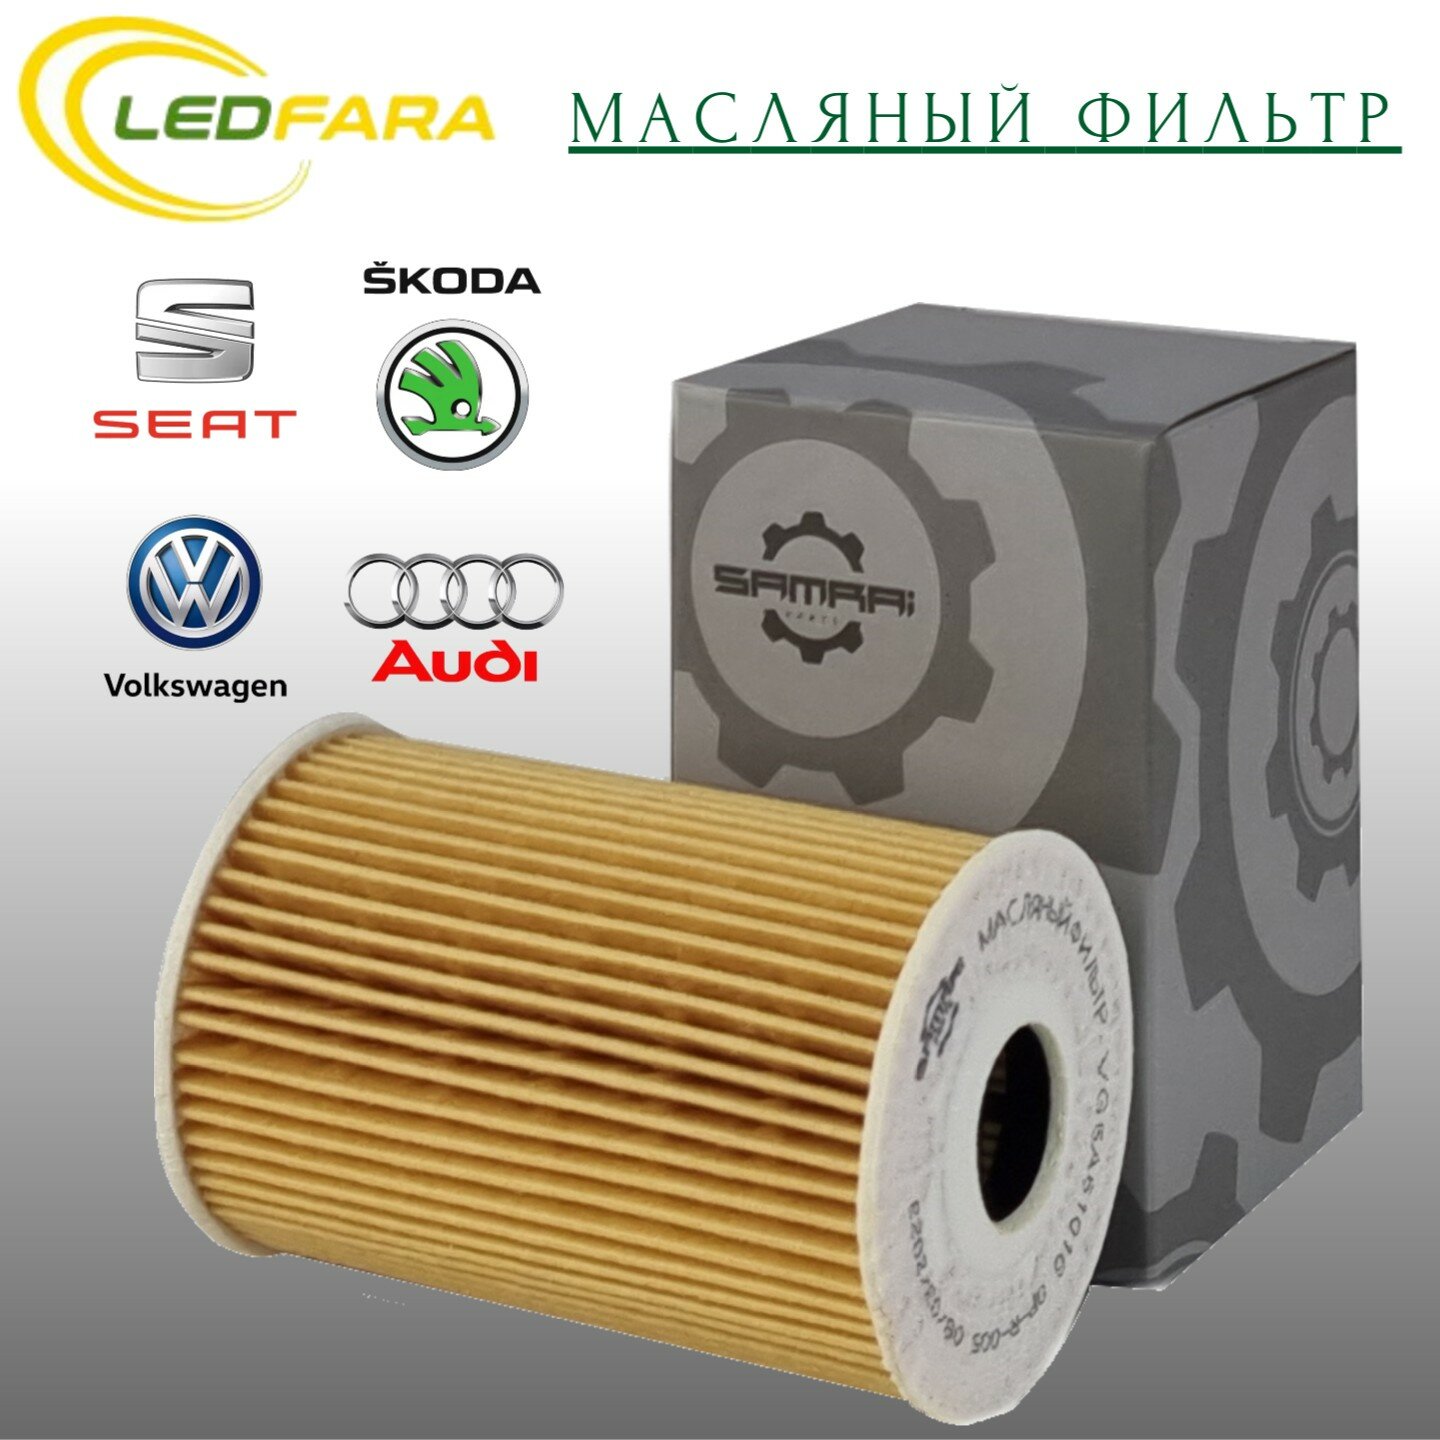 Масляный фильтр Samrai Parts для Audi Volkswagen Skoda VG5A61016 03L 115 562 HU 7008 z 61016A5